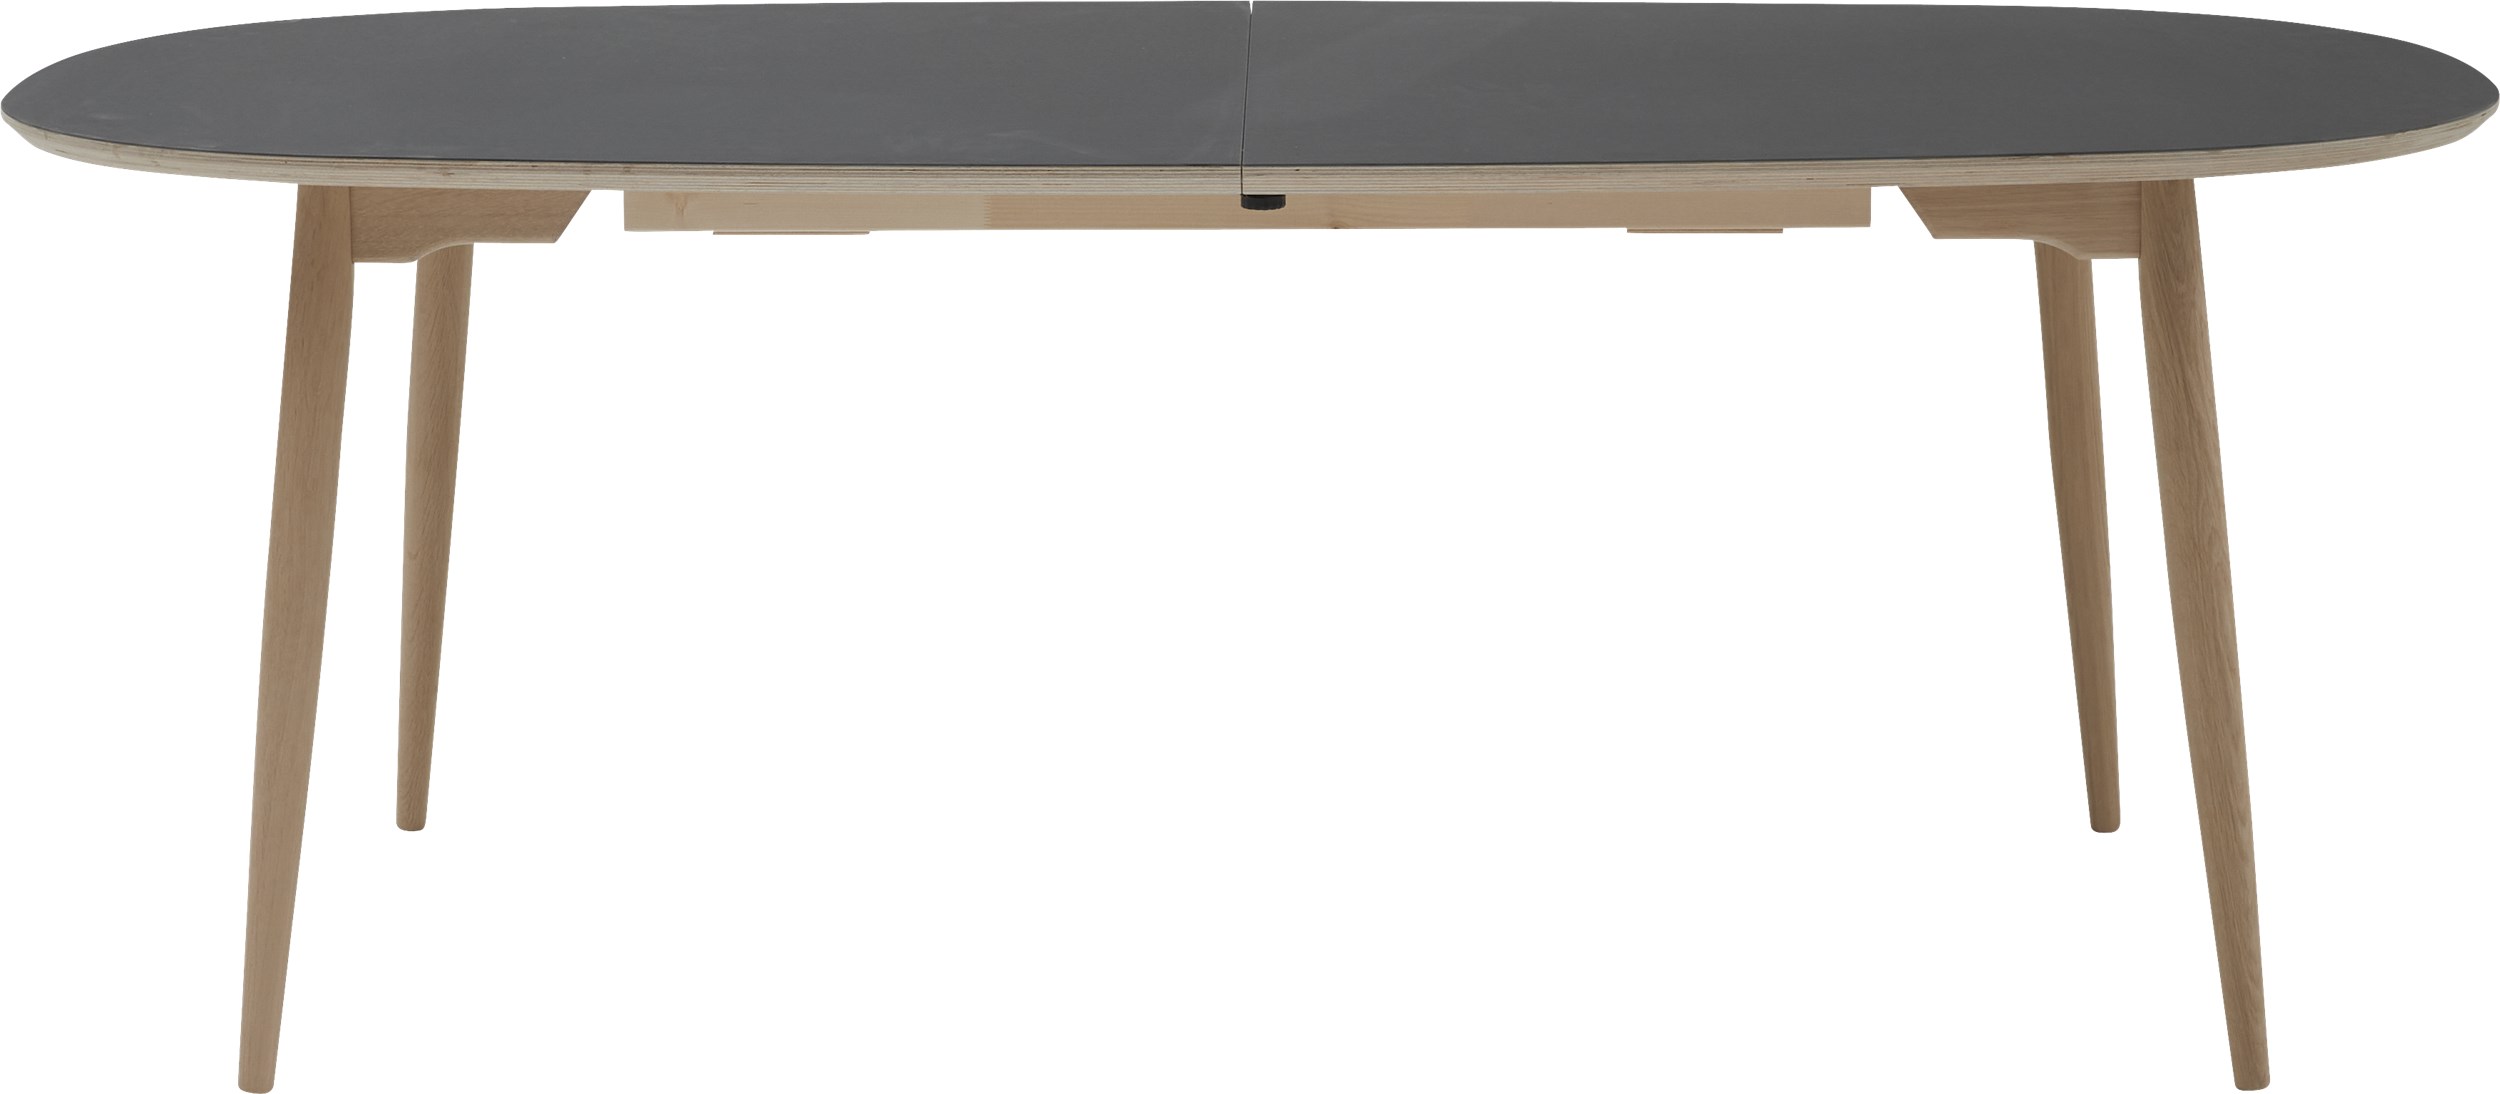 Haslev 5-H Matbord 200 x 105 x 74 cm - Topp i svart linoleum, kant i björkkryssfaner och ben i obehandlad ek